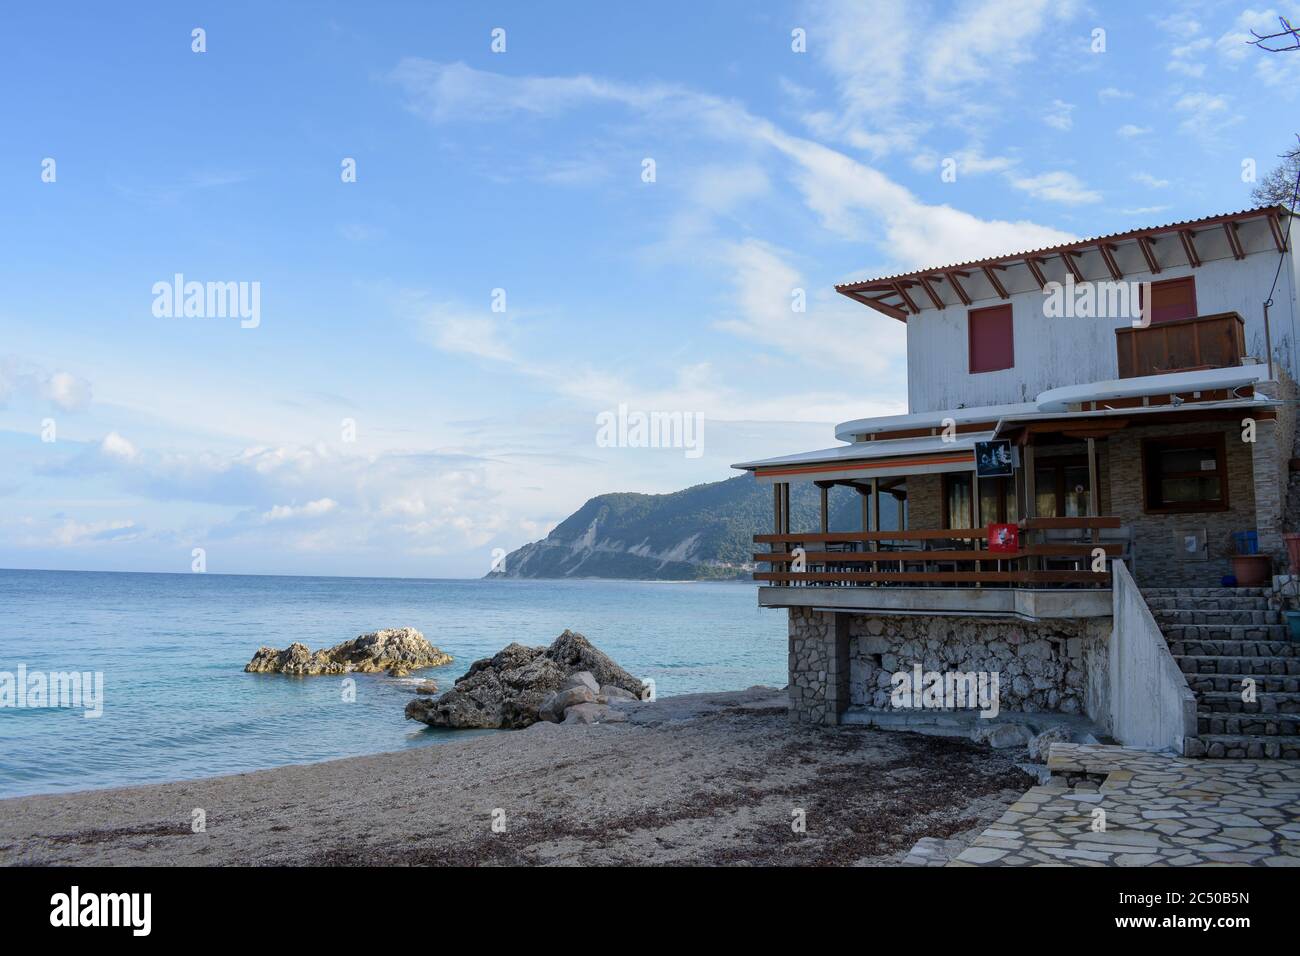 The small holiday resort of Agio Nikita in lefkada island, Greece. Stock Photo